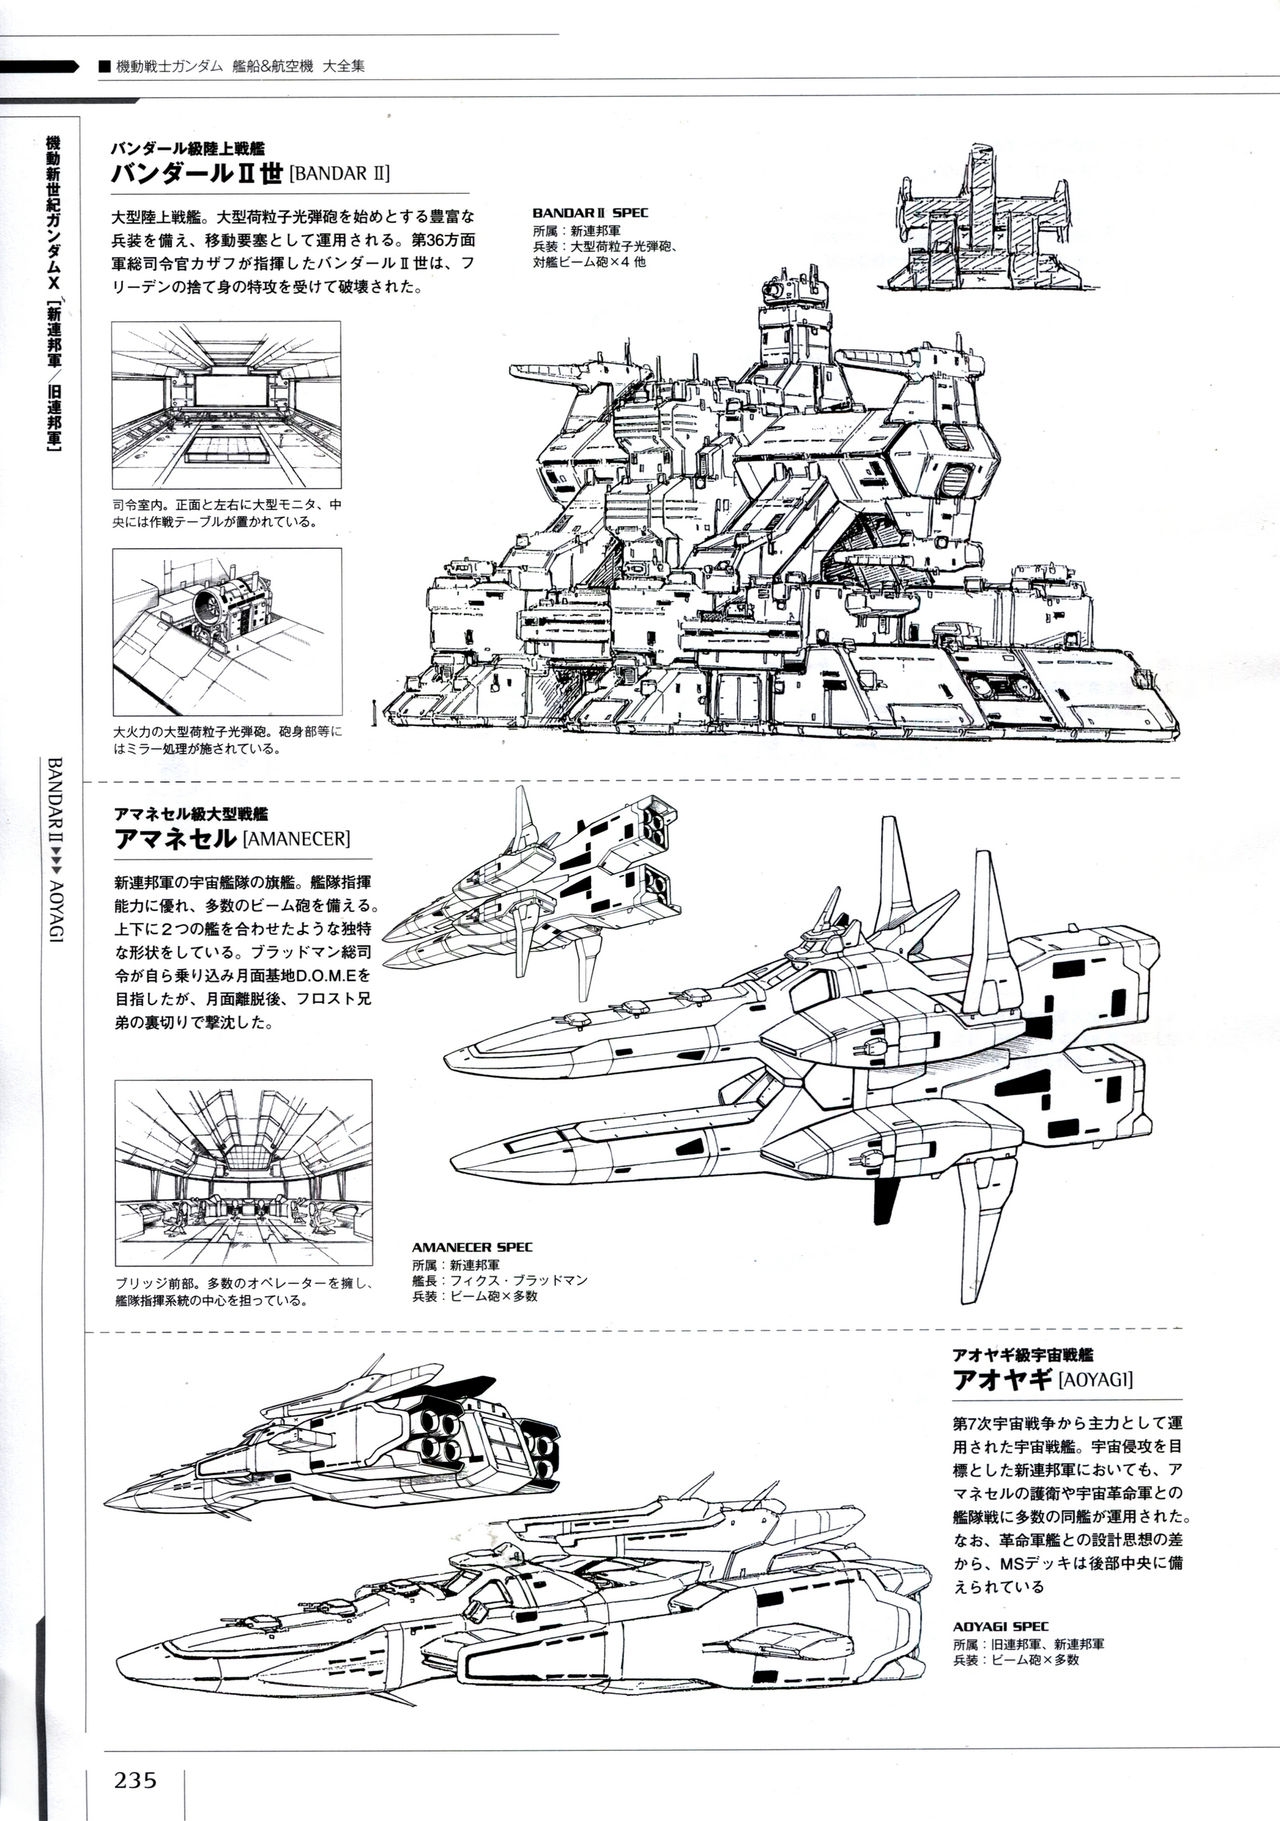 Mobile Suit Gundam - Ship & Aerospace Plane Encyclopedia - Revised Edition 240